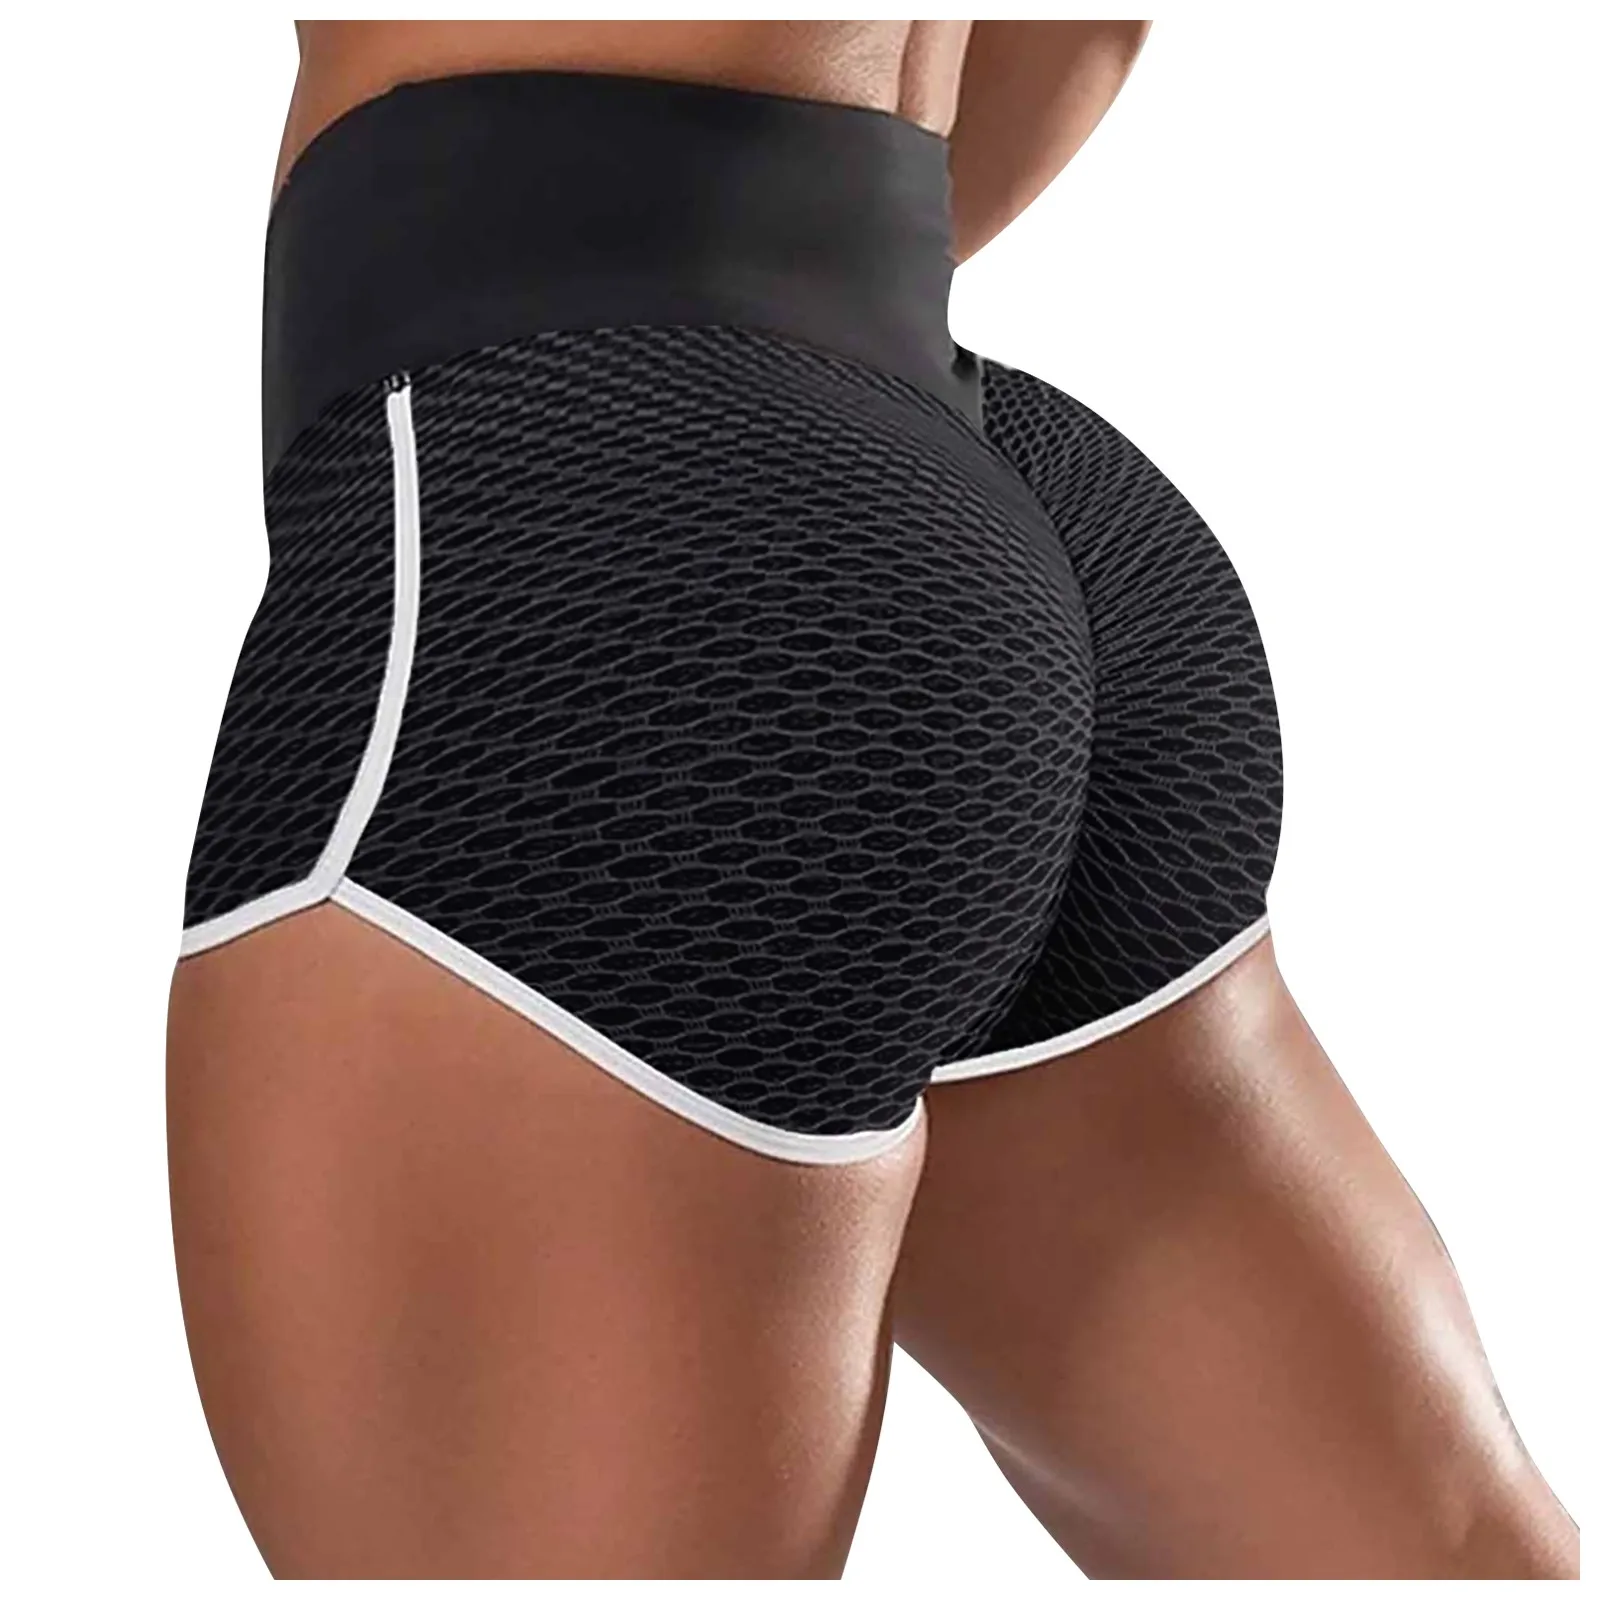 

Women's Casual Tight-fitting Skinny Buttocks Lifting Fitness Sports Yoga Shorts pantalon femme sports wear for women gym L*5